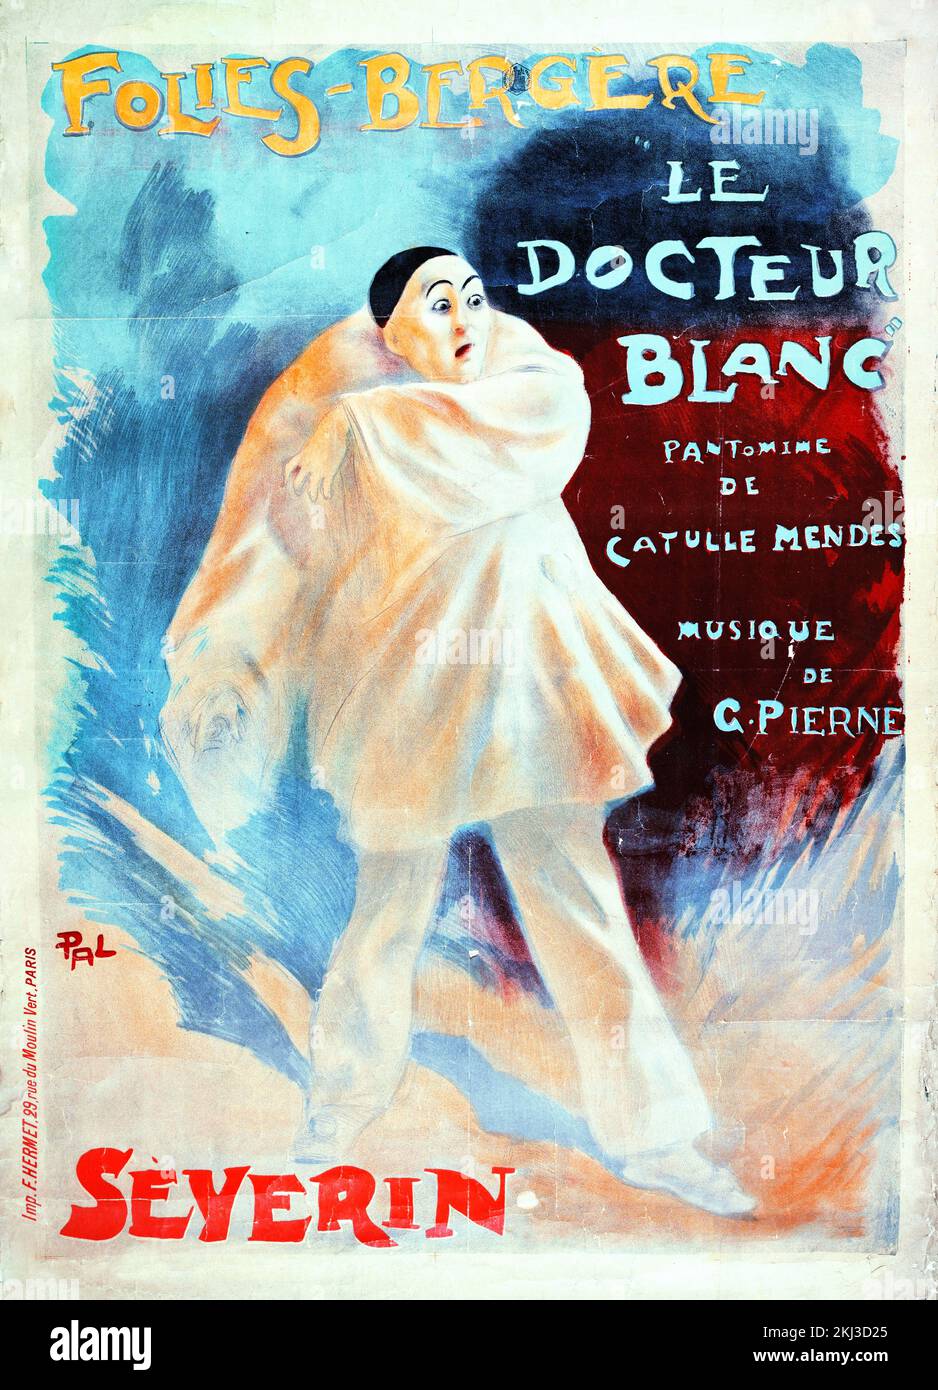 The White Doctor - Le Docteur Blanc - pantomime by Catulle Mendès at the Folies-Bergère - vintage poster by PAL illustration - Jean de Paleologu (or Paleologue) (1855 – 24 November 1942) Stock Photo